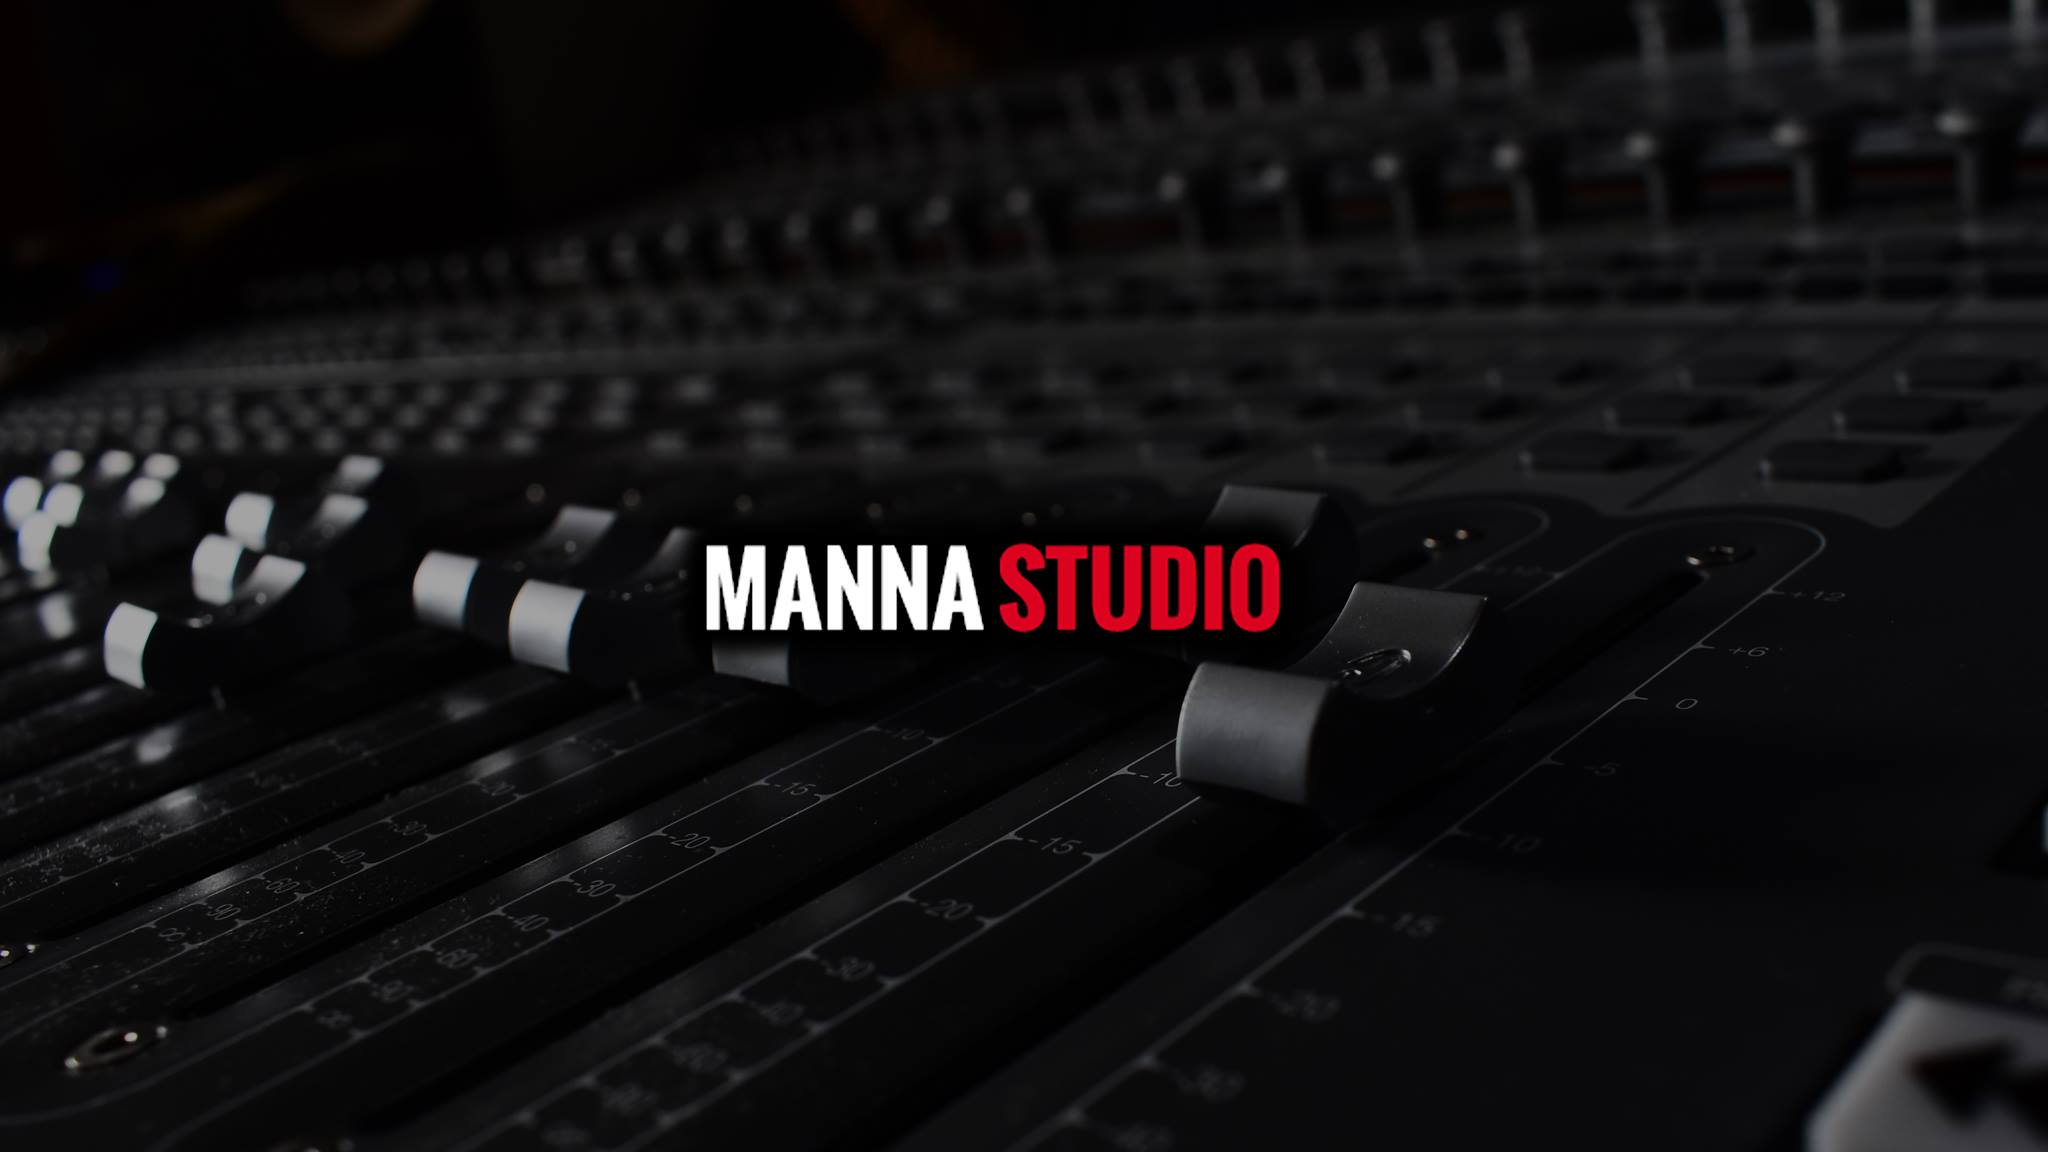 Manna Studio